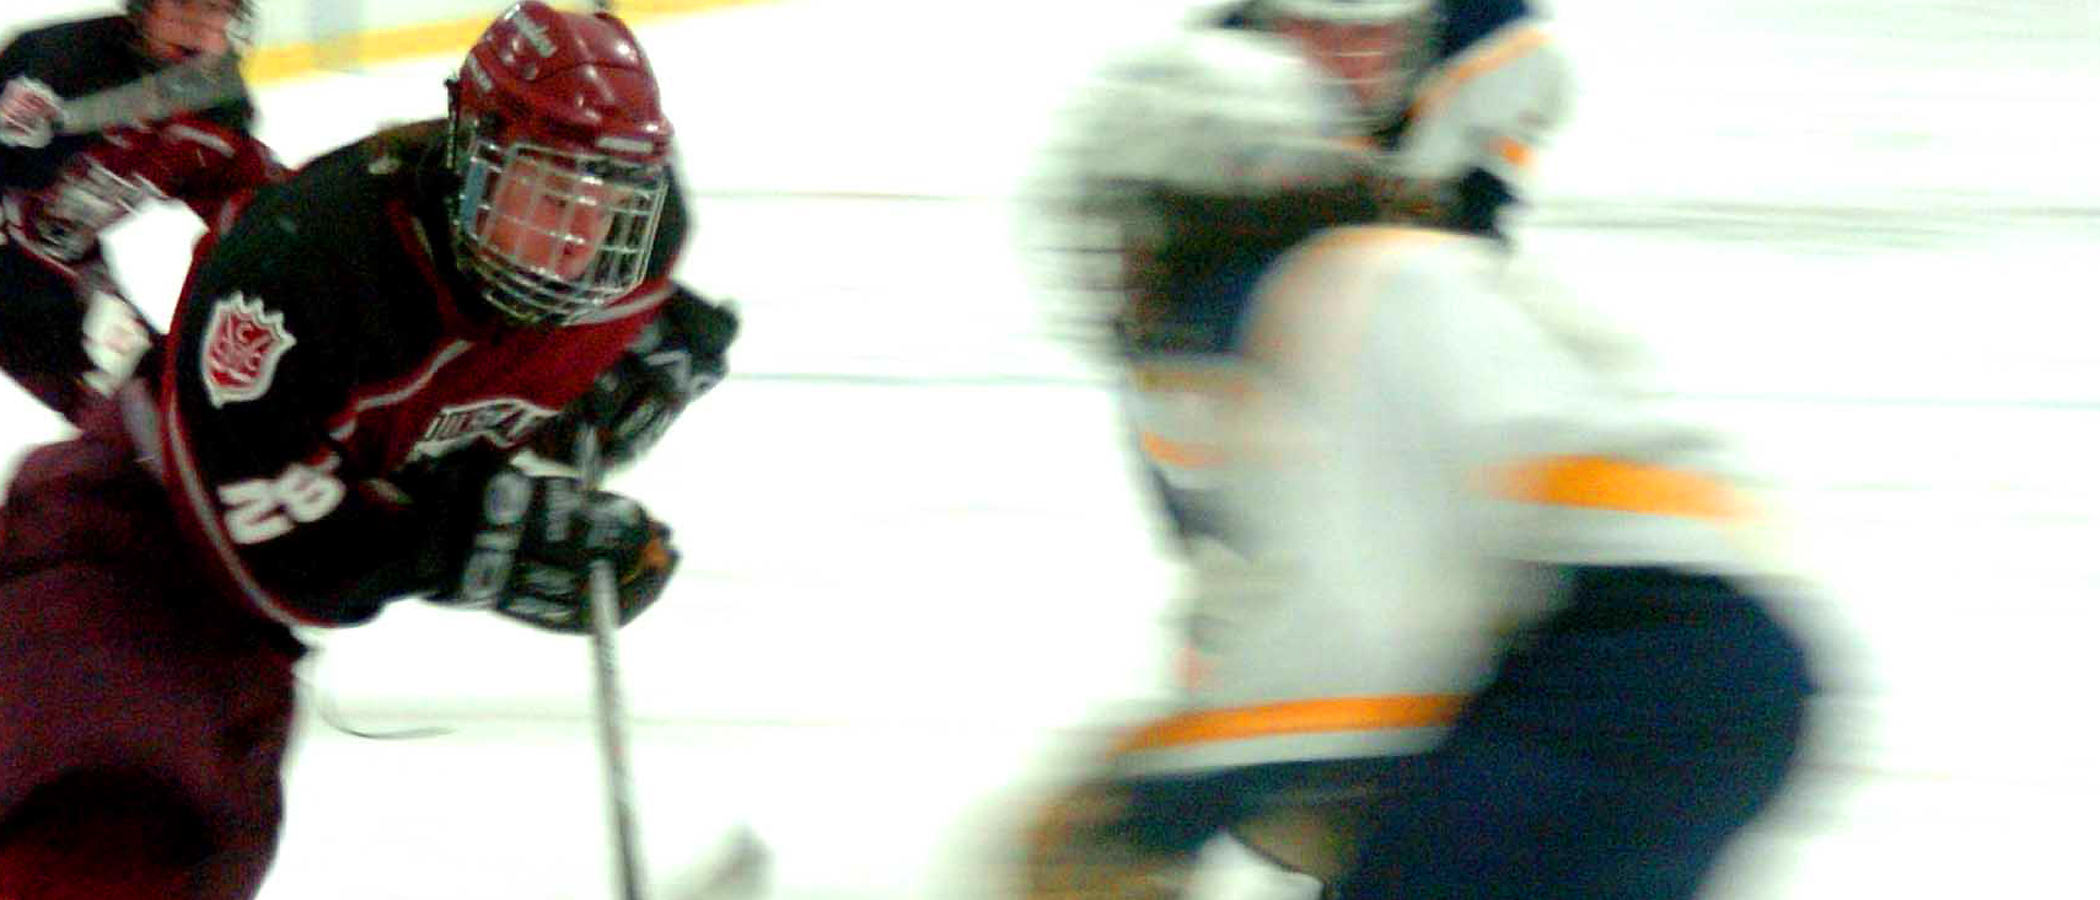 blurry hockey